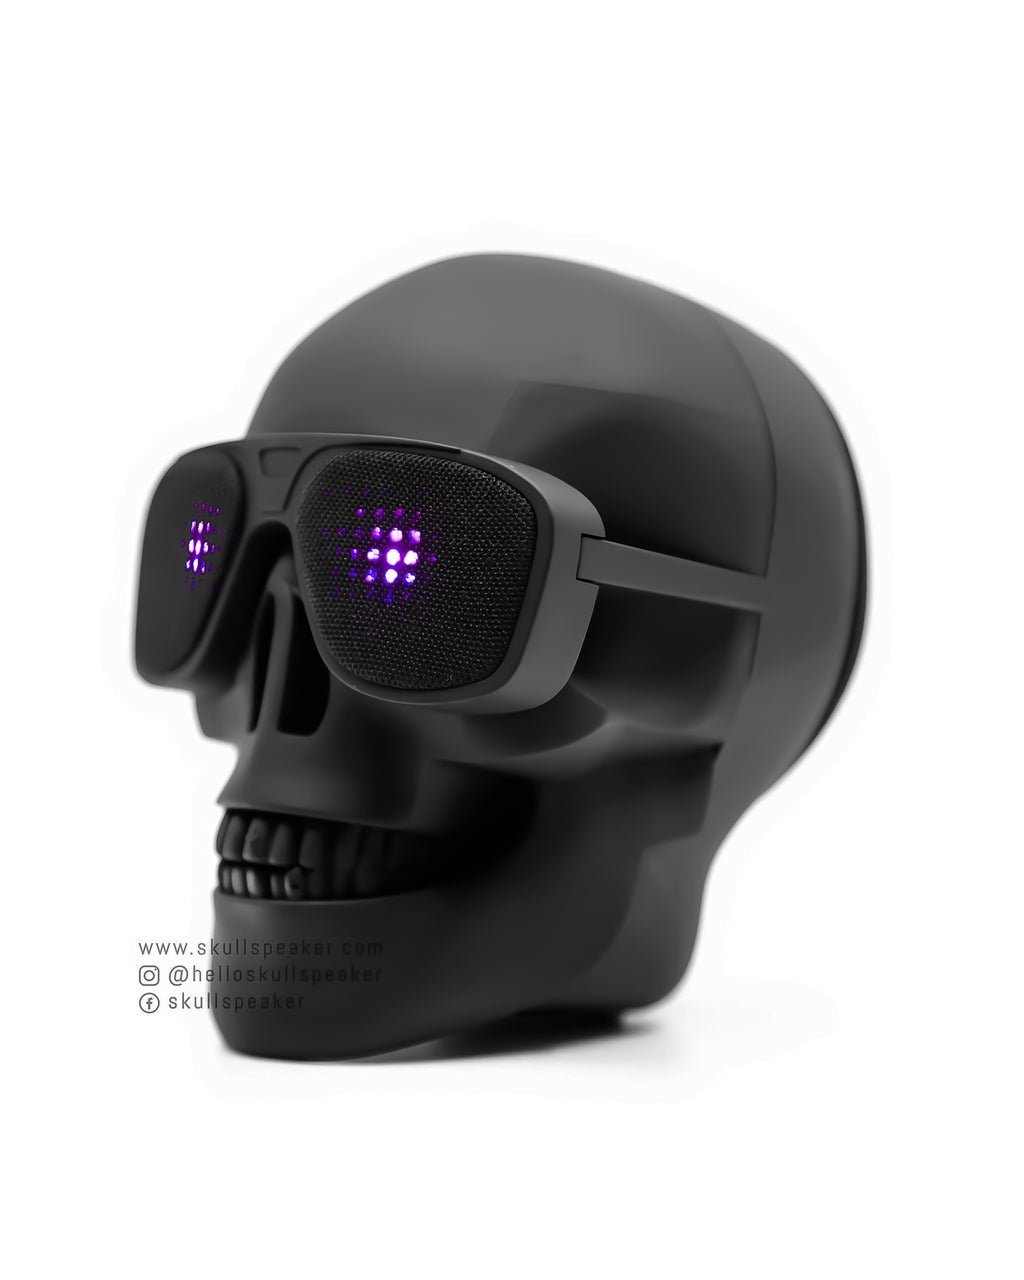 Skull Speaker with RGB lights